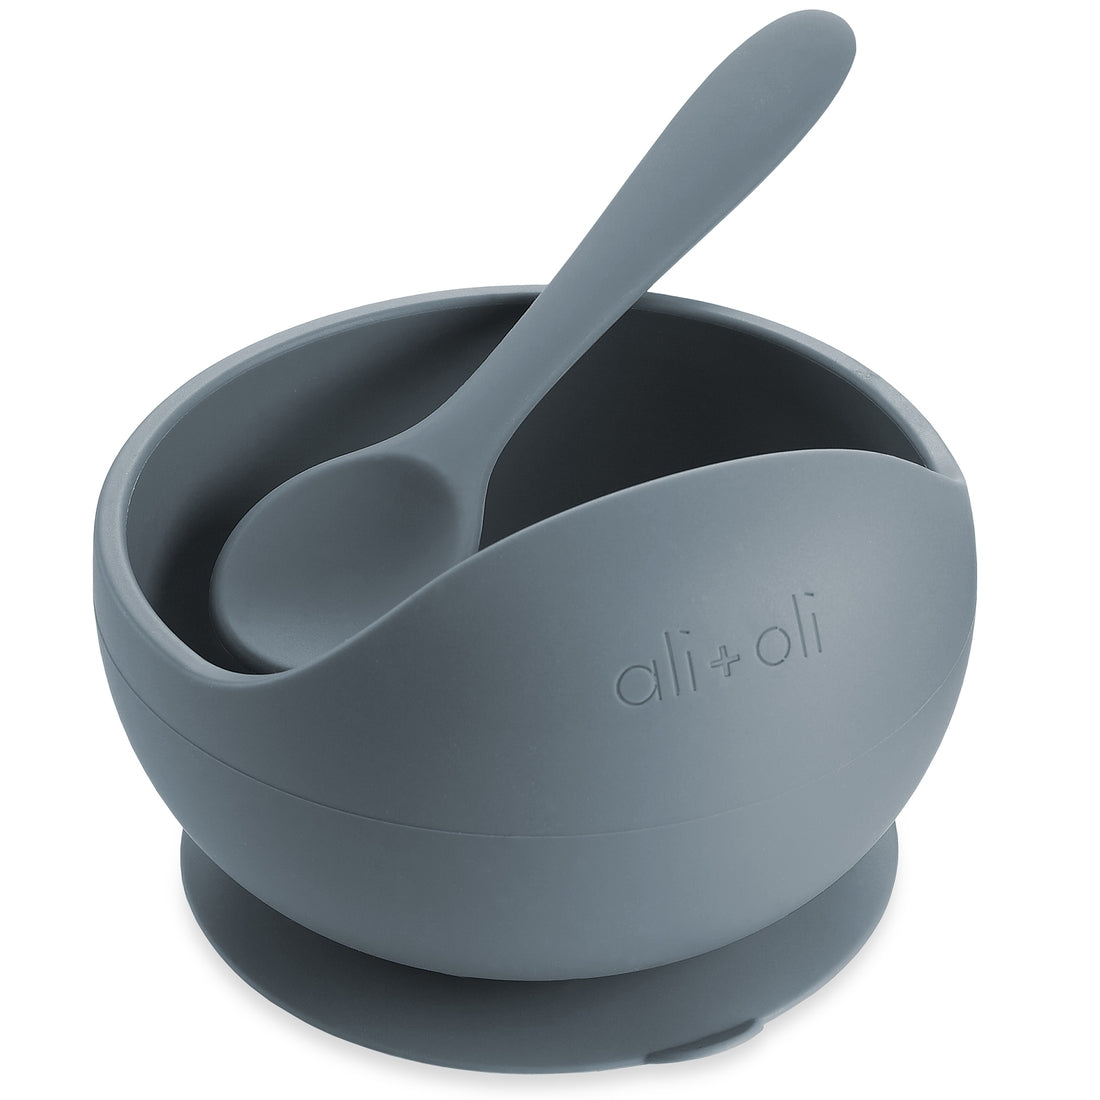 Silicone Suction Bowl & Spoon Set, Iron